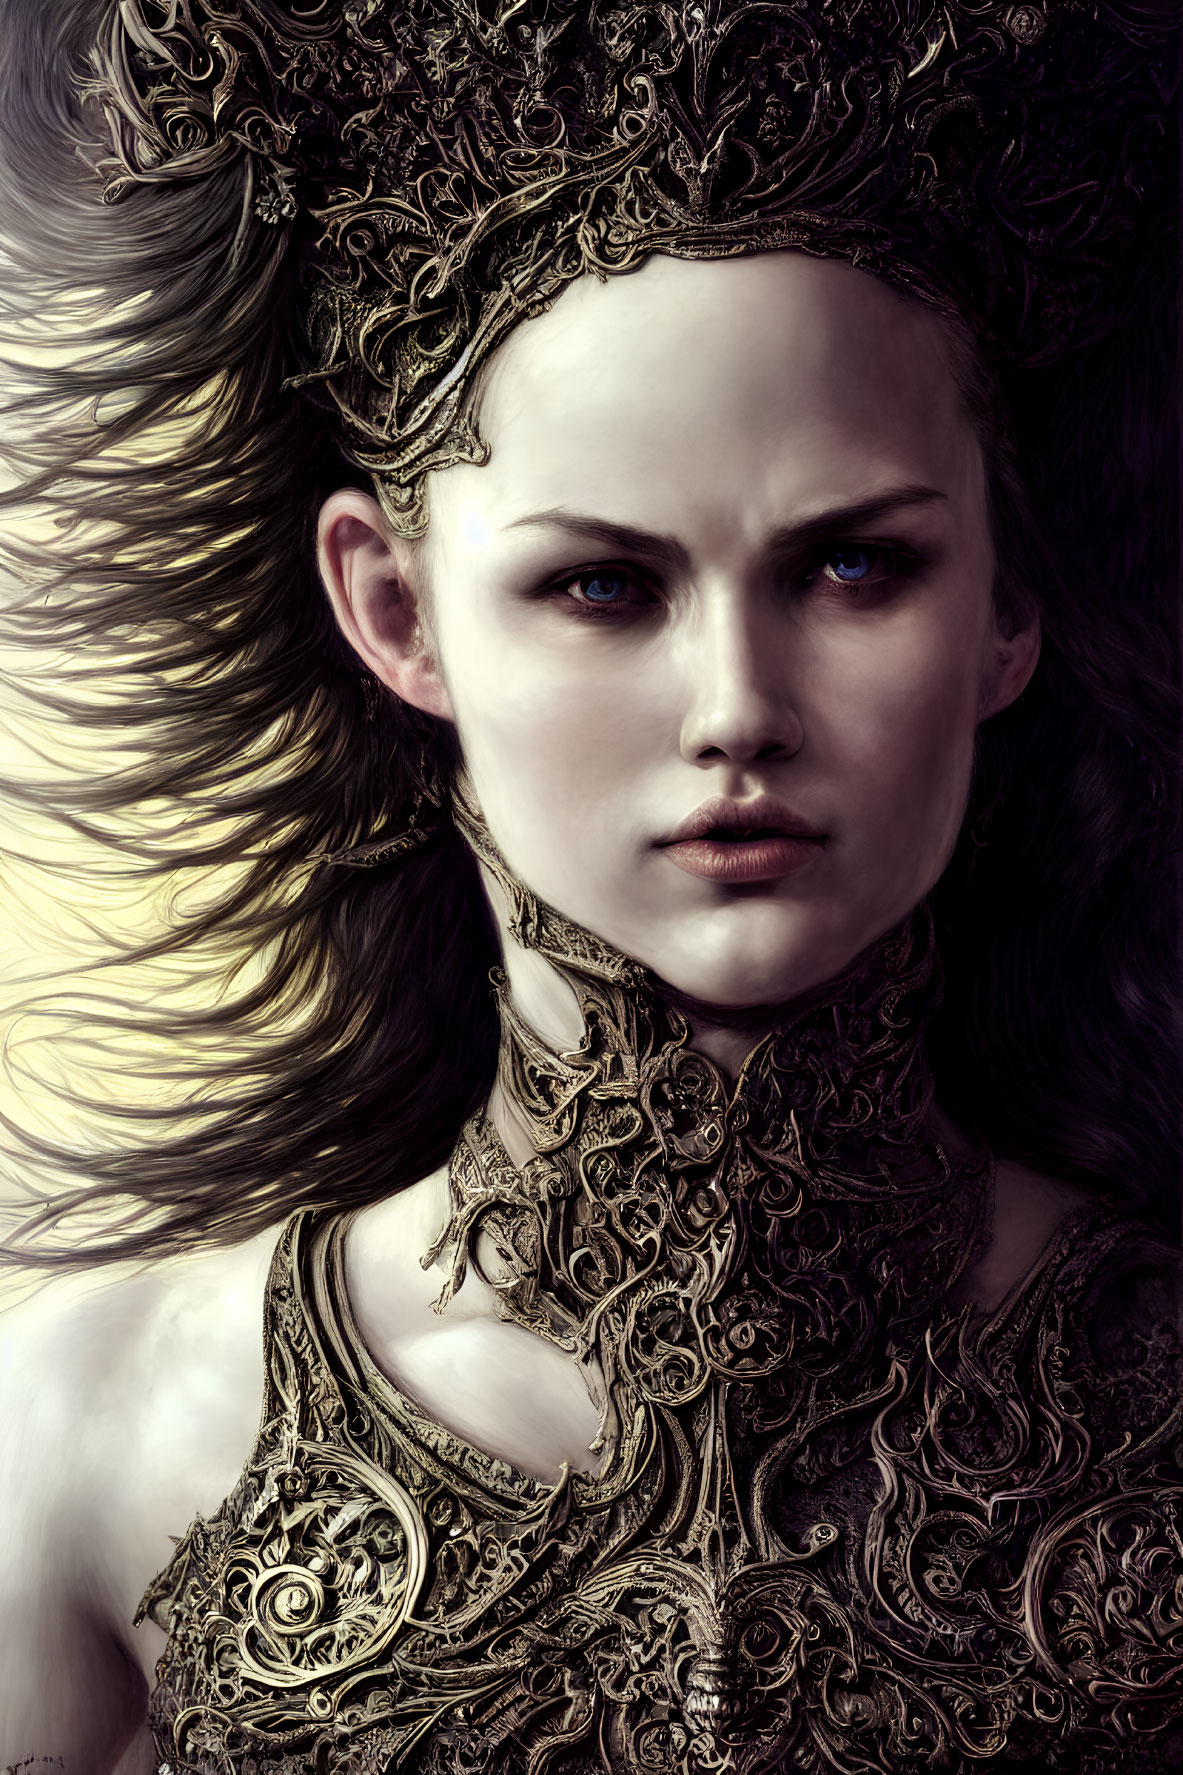 Detailed digital artwork: Woman in golden armor with elaborate headdress.